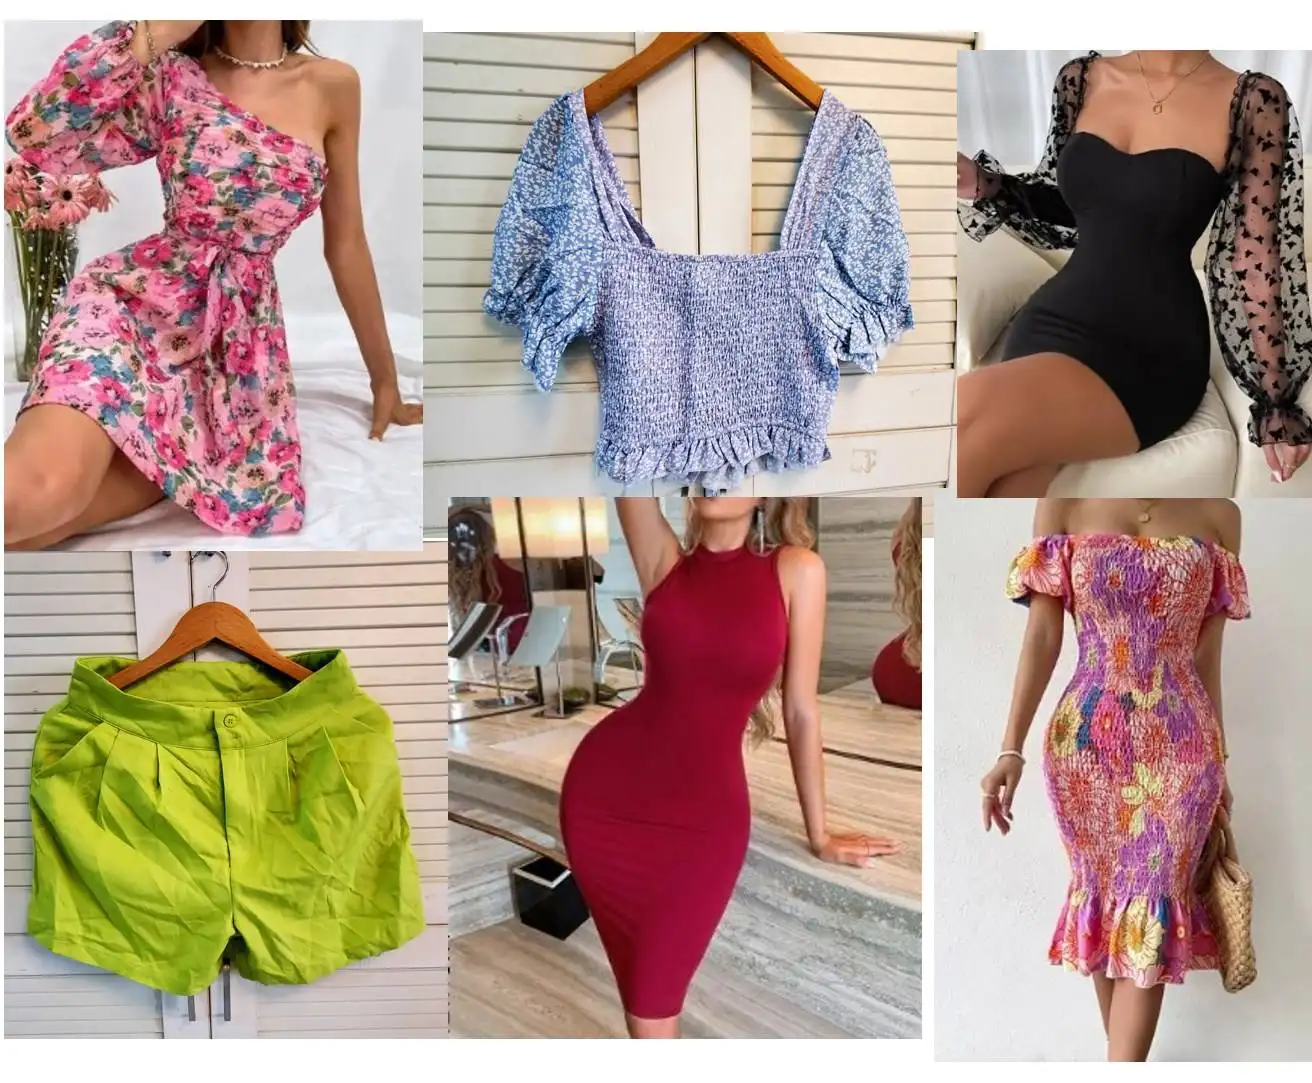 Premium Wholesale vestido colheita tops pacote roupas a granel marca new swimsuit bale mulheres granel produtos sexy atacado